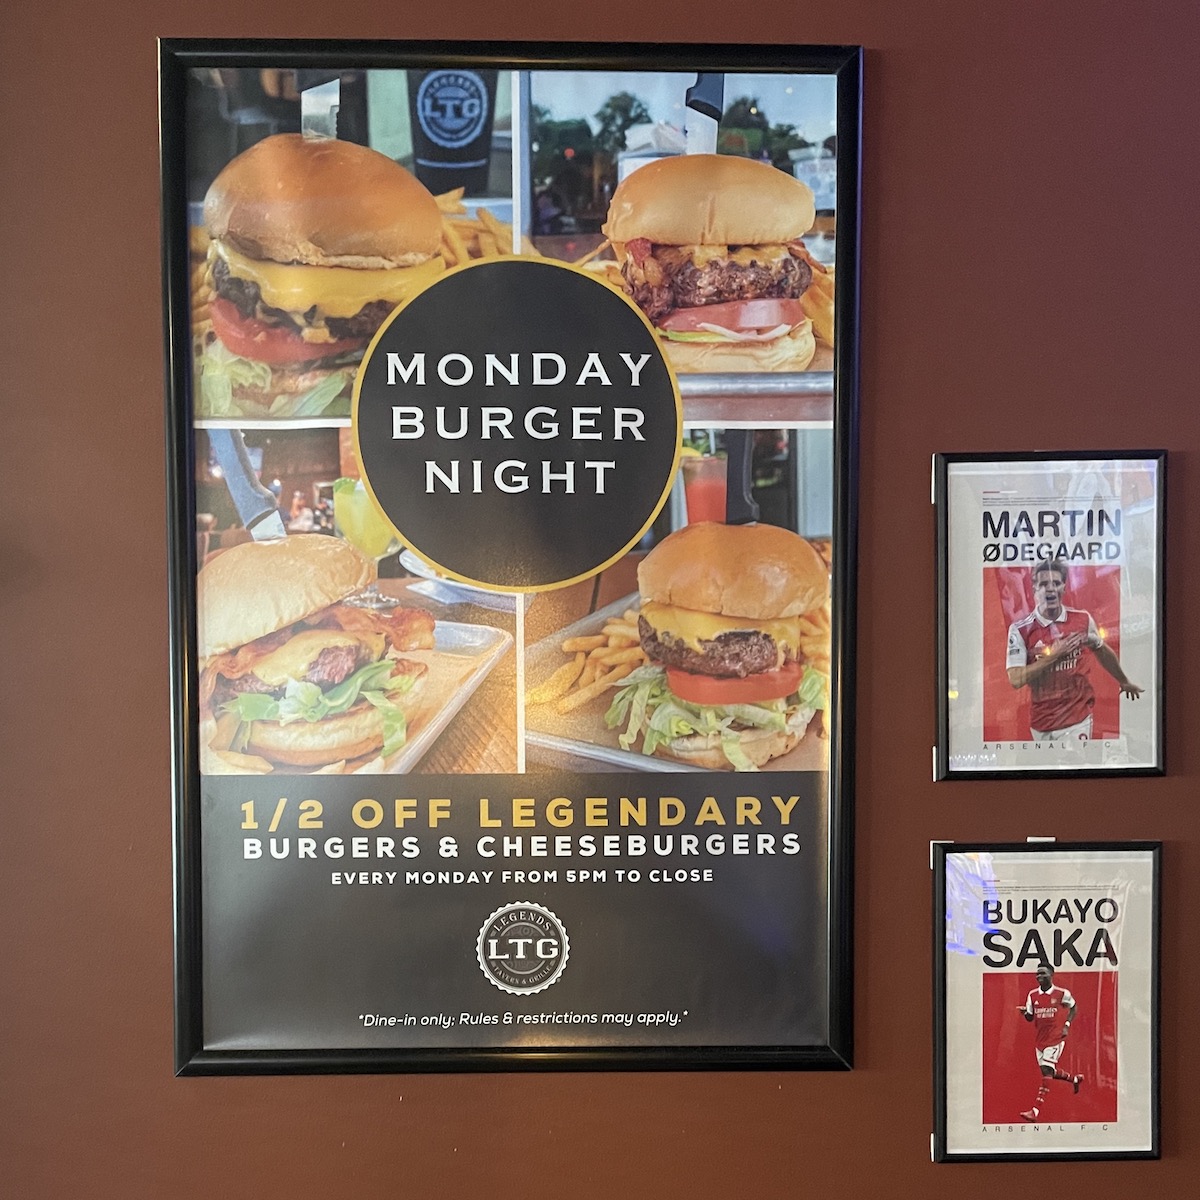 Monday Burger Night at Legends Tavern Grille in Plantation, Florida